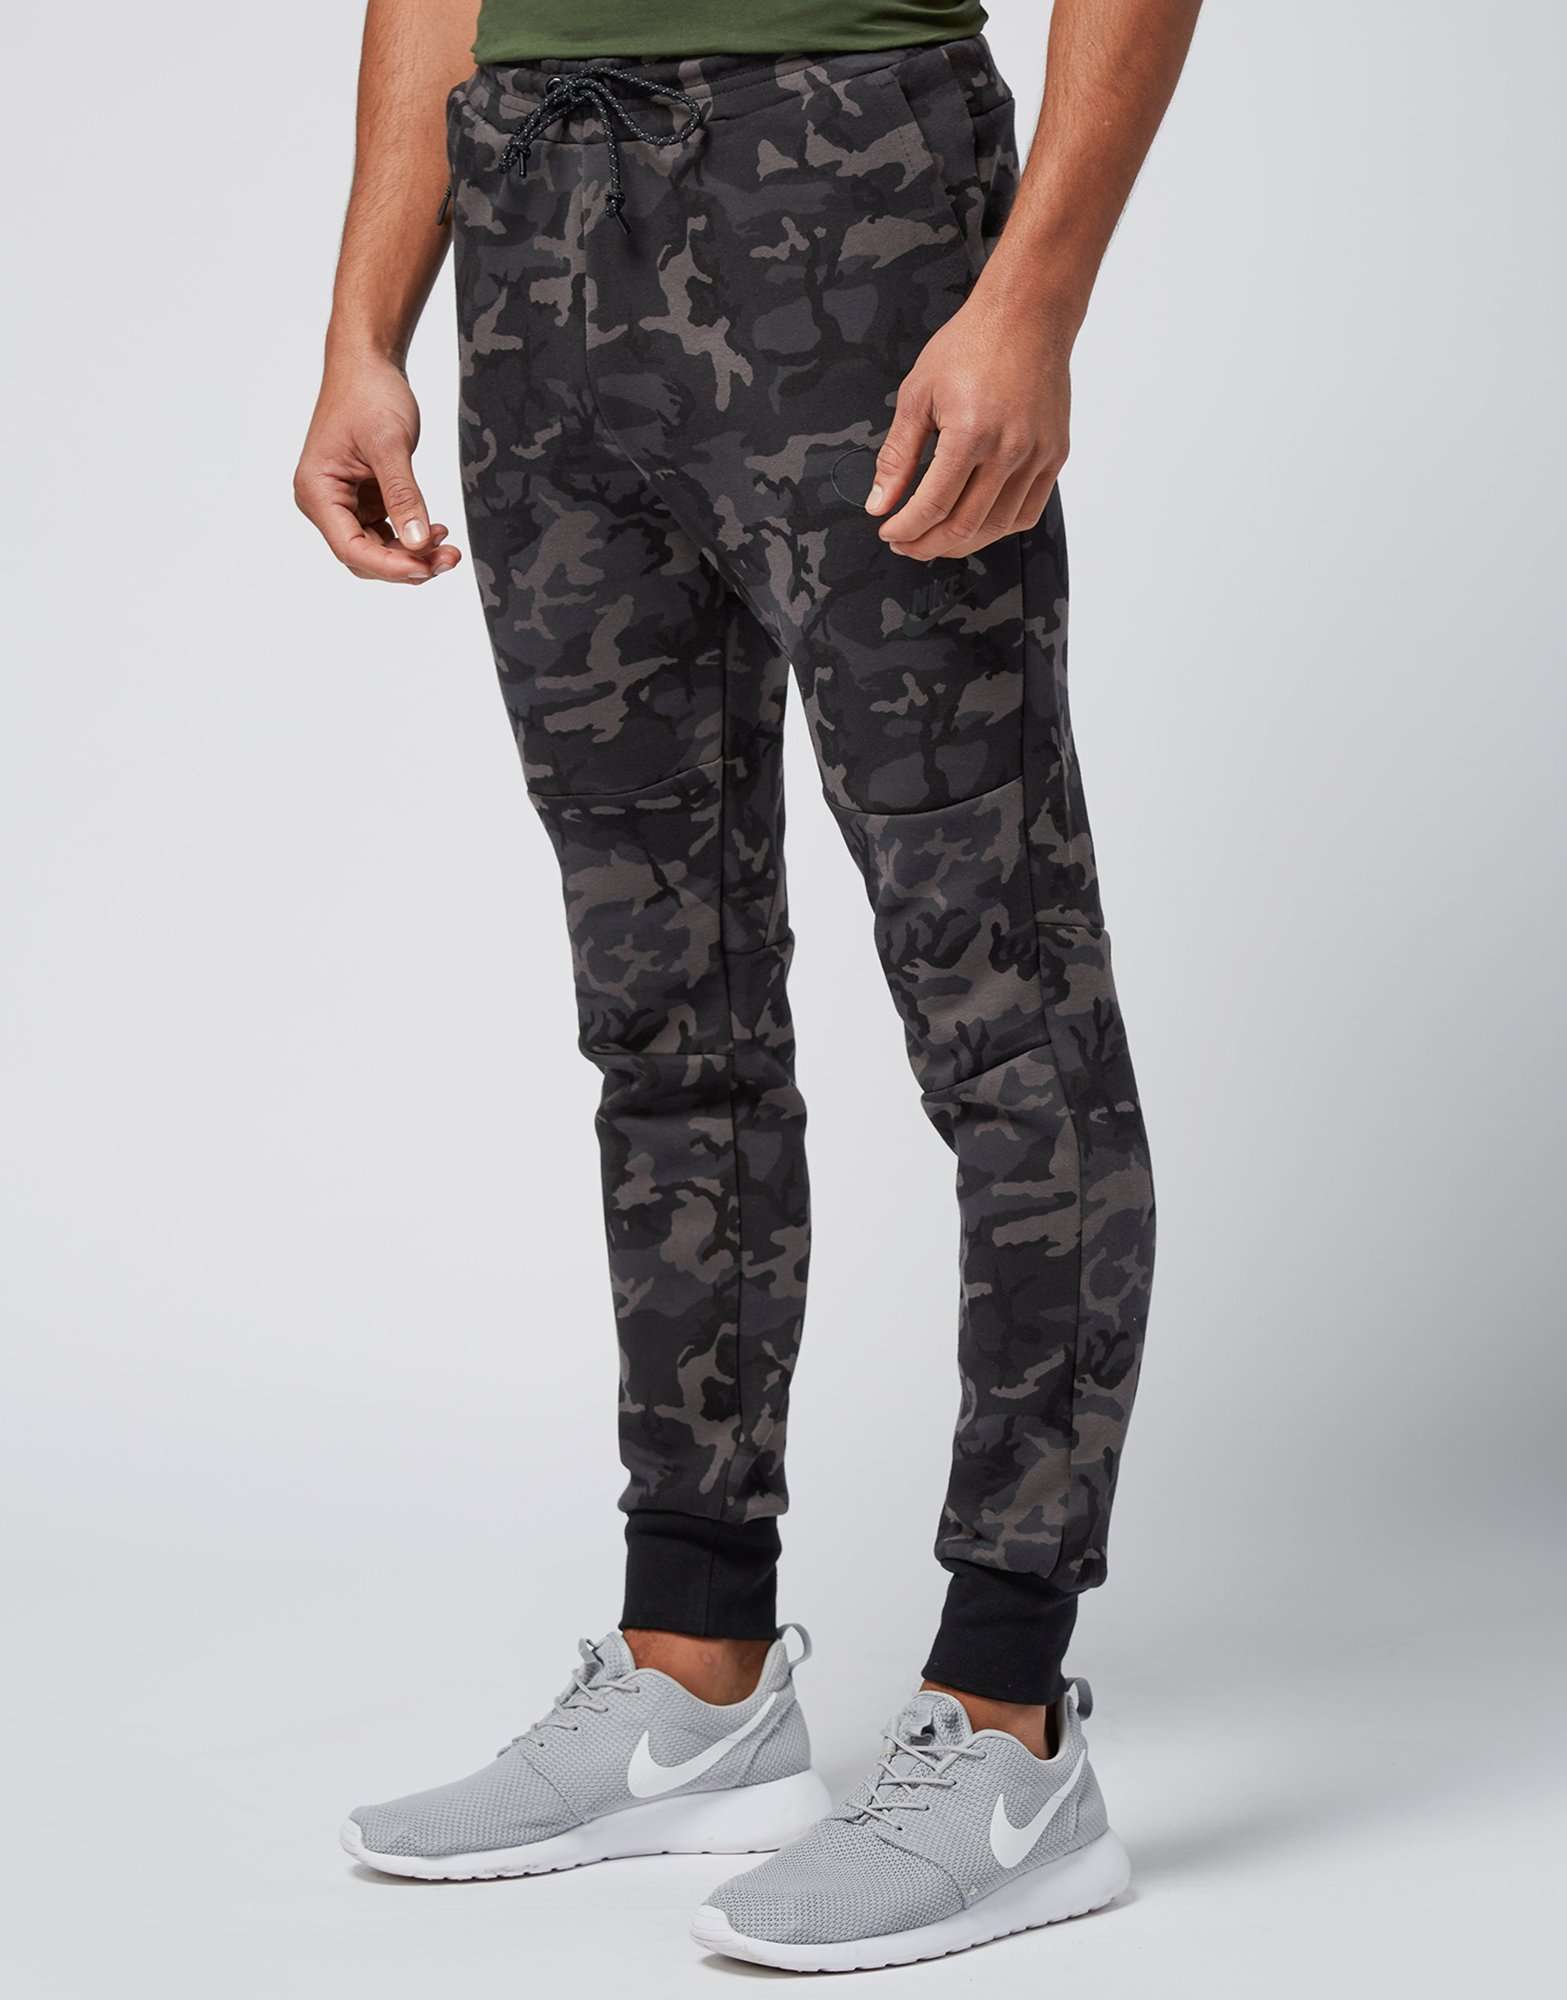 Nike Tech Camo Fleece Pants | scotts Menswear